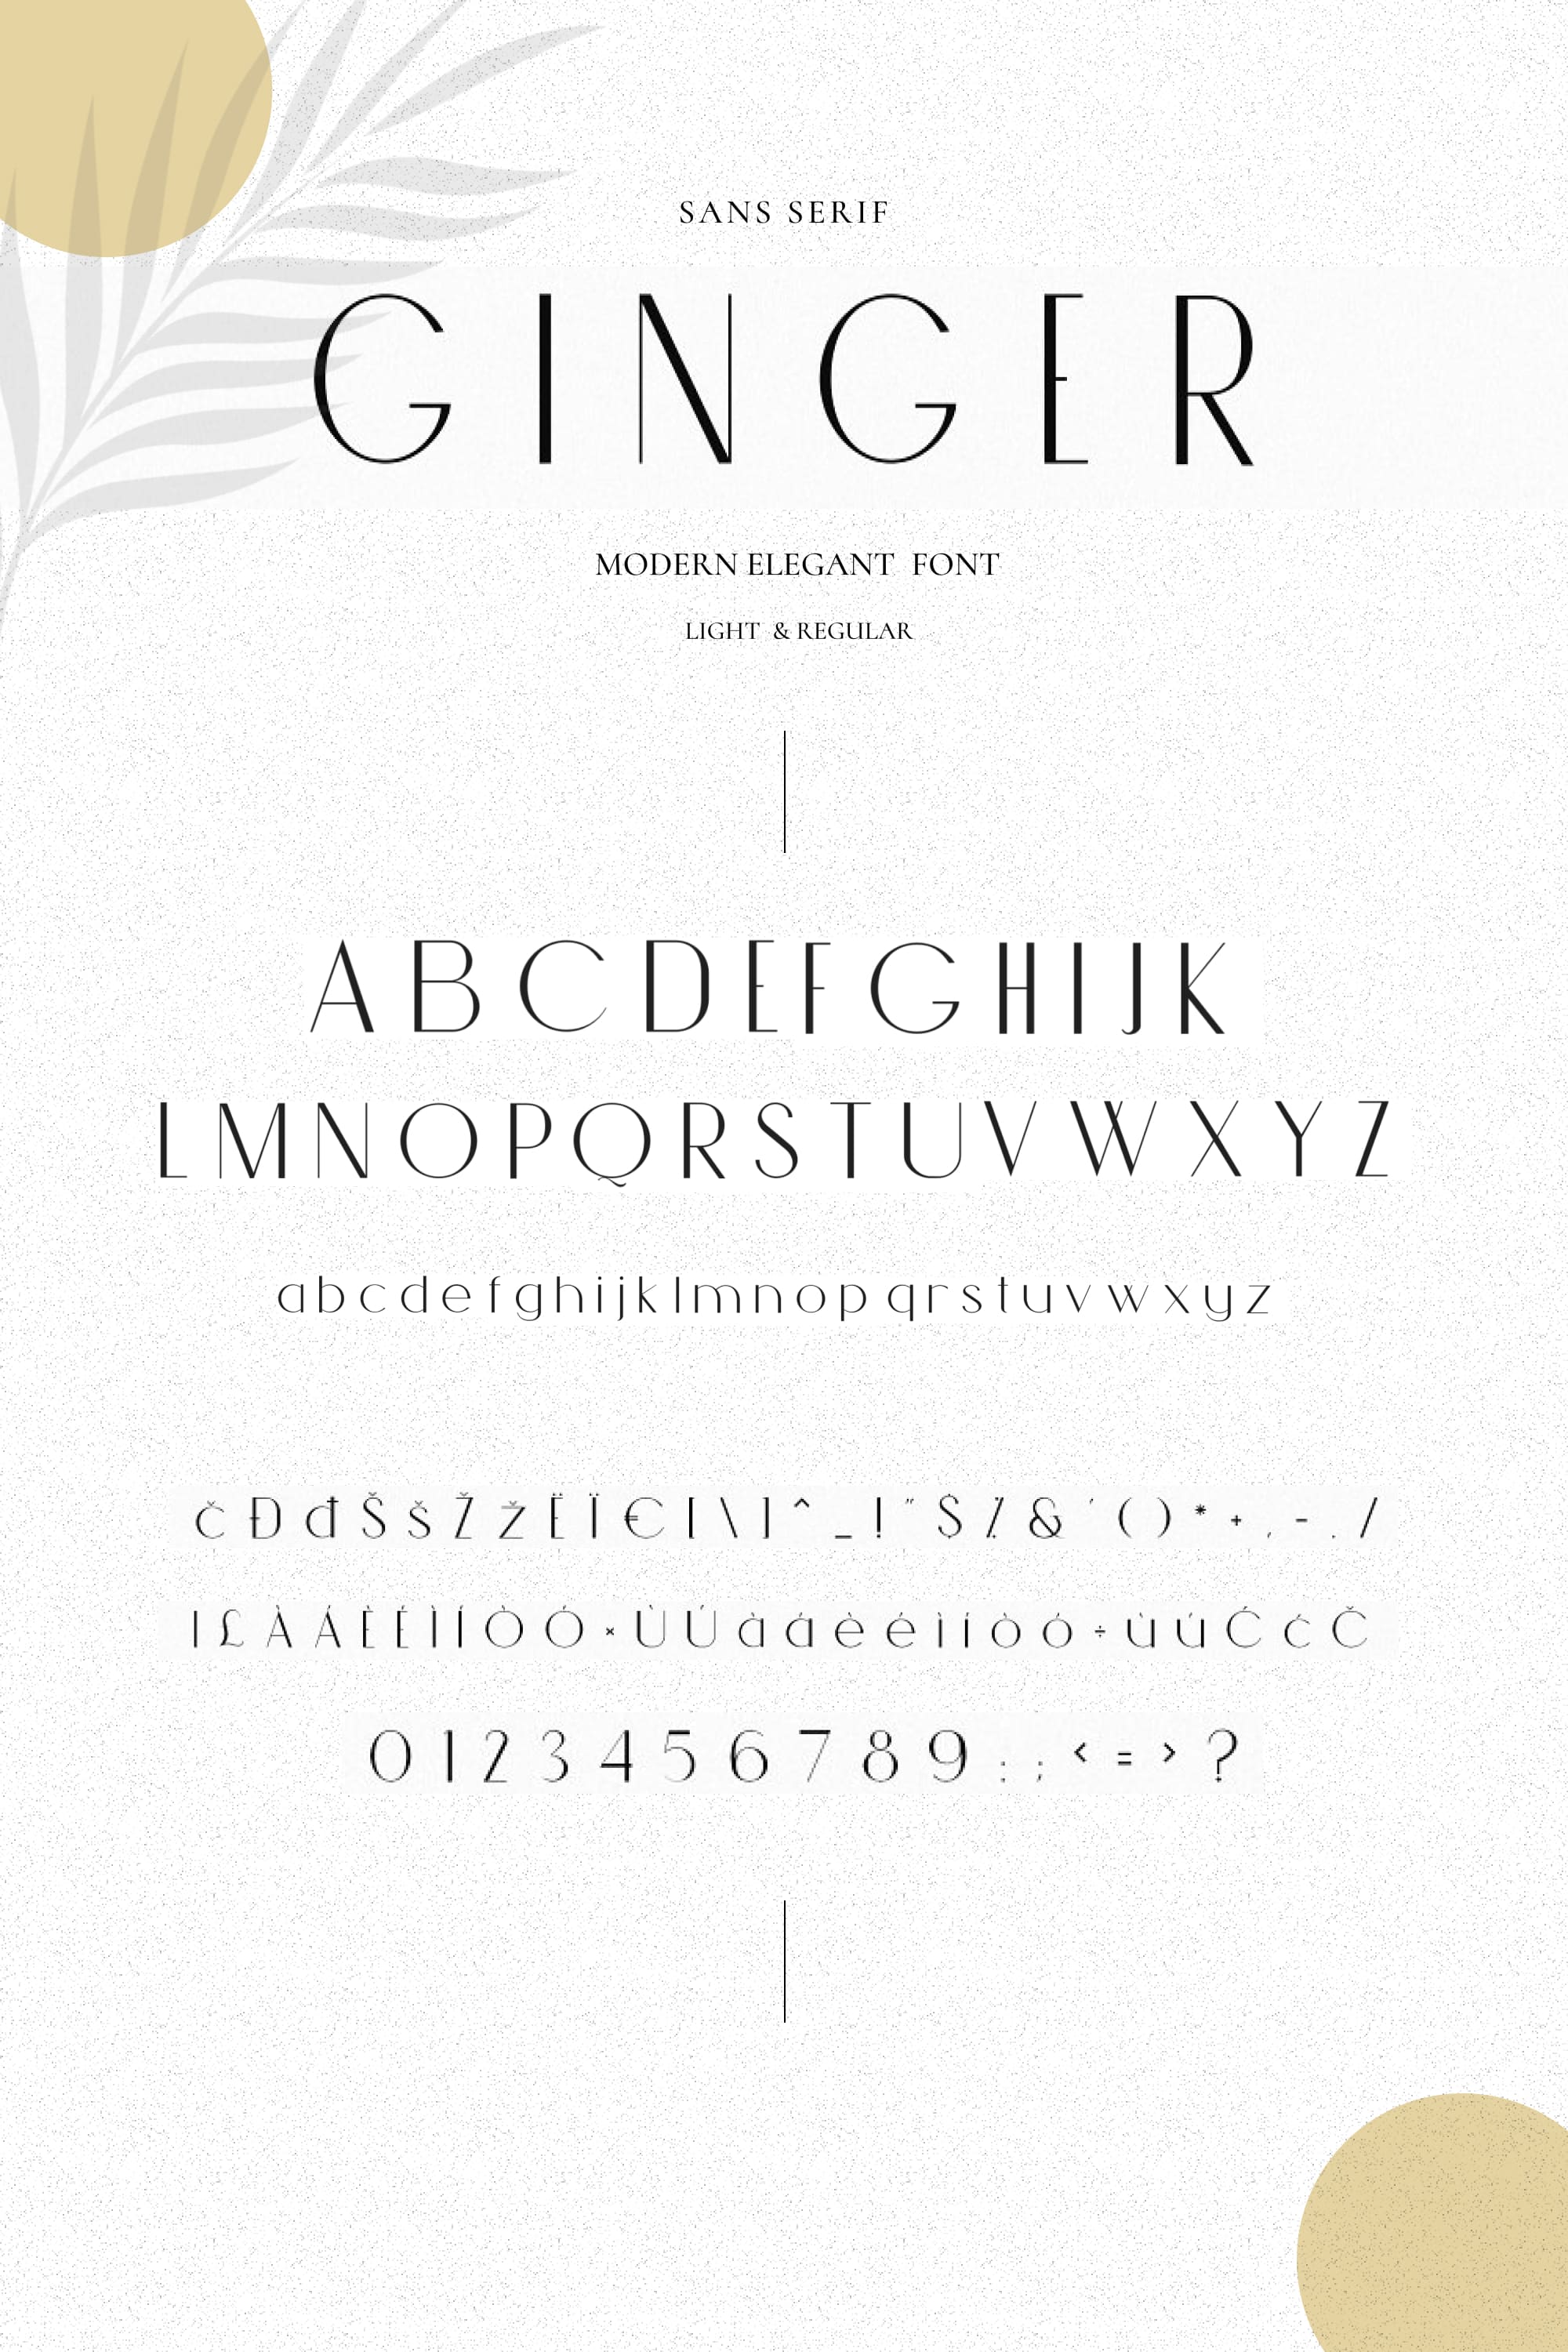 Ginger An Elegant Modern Font Pinterest Image.